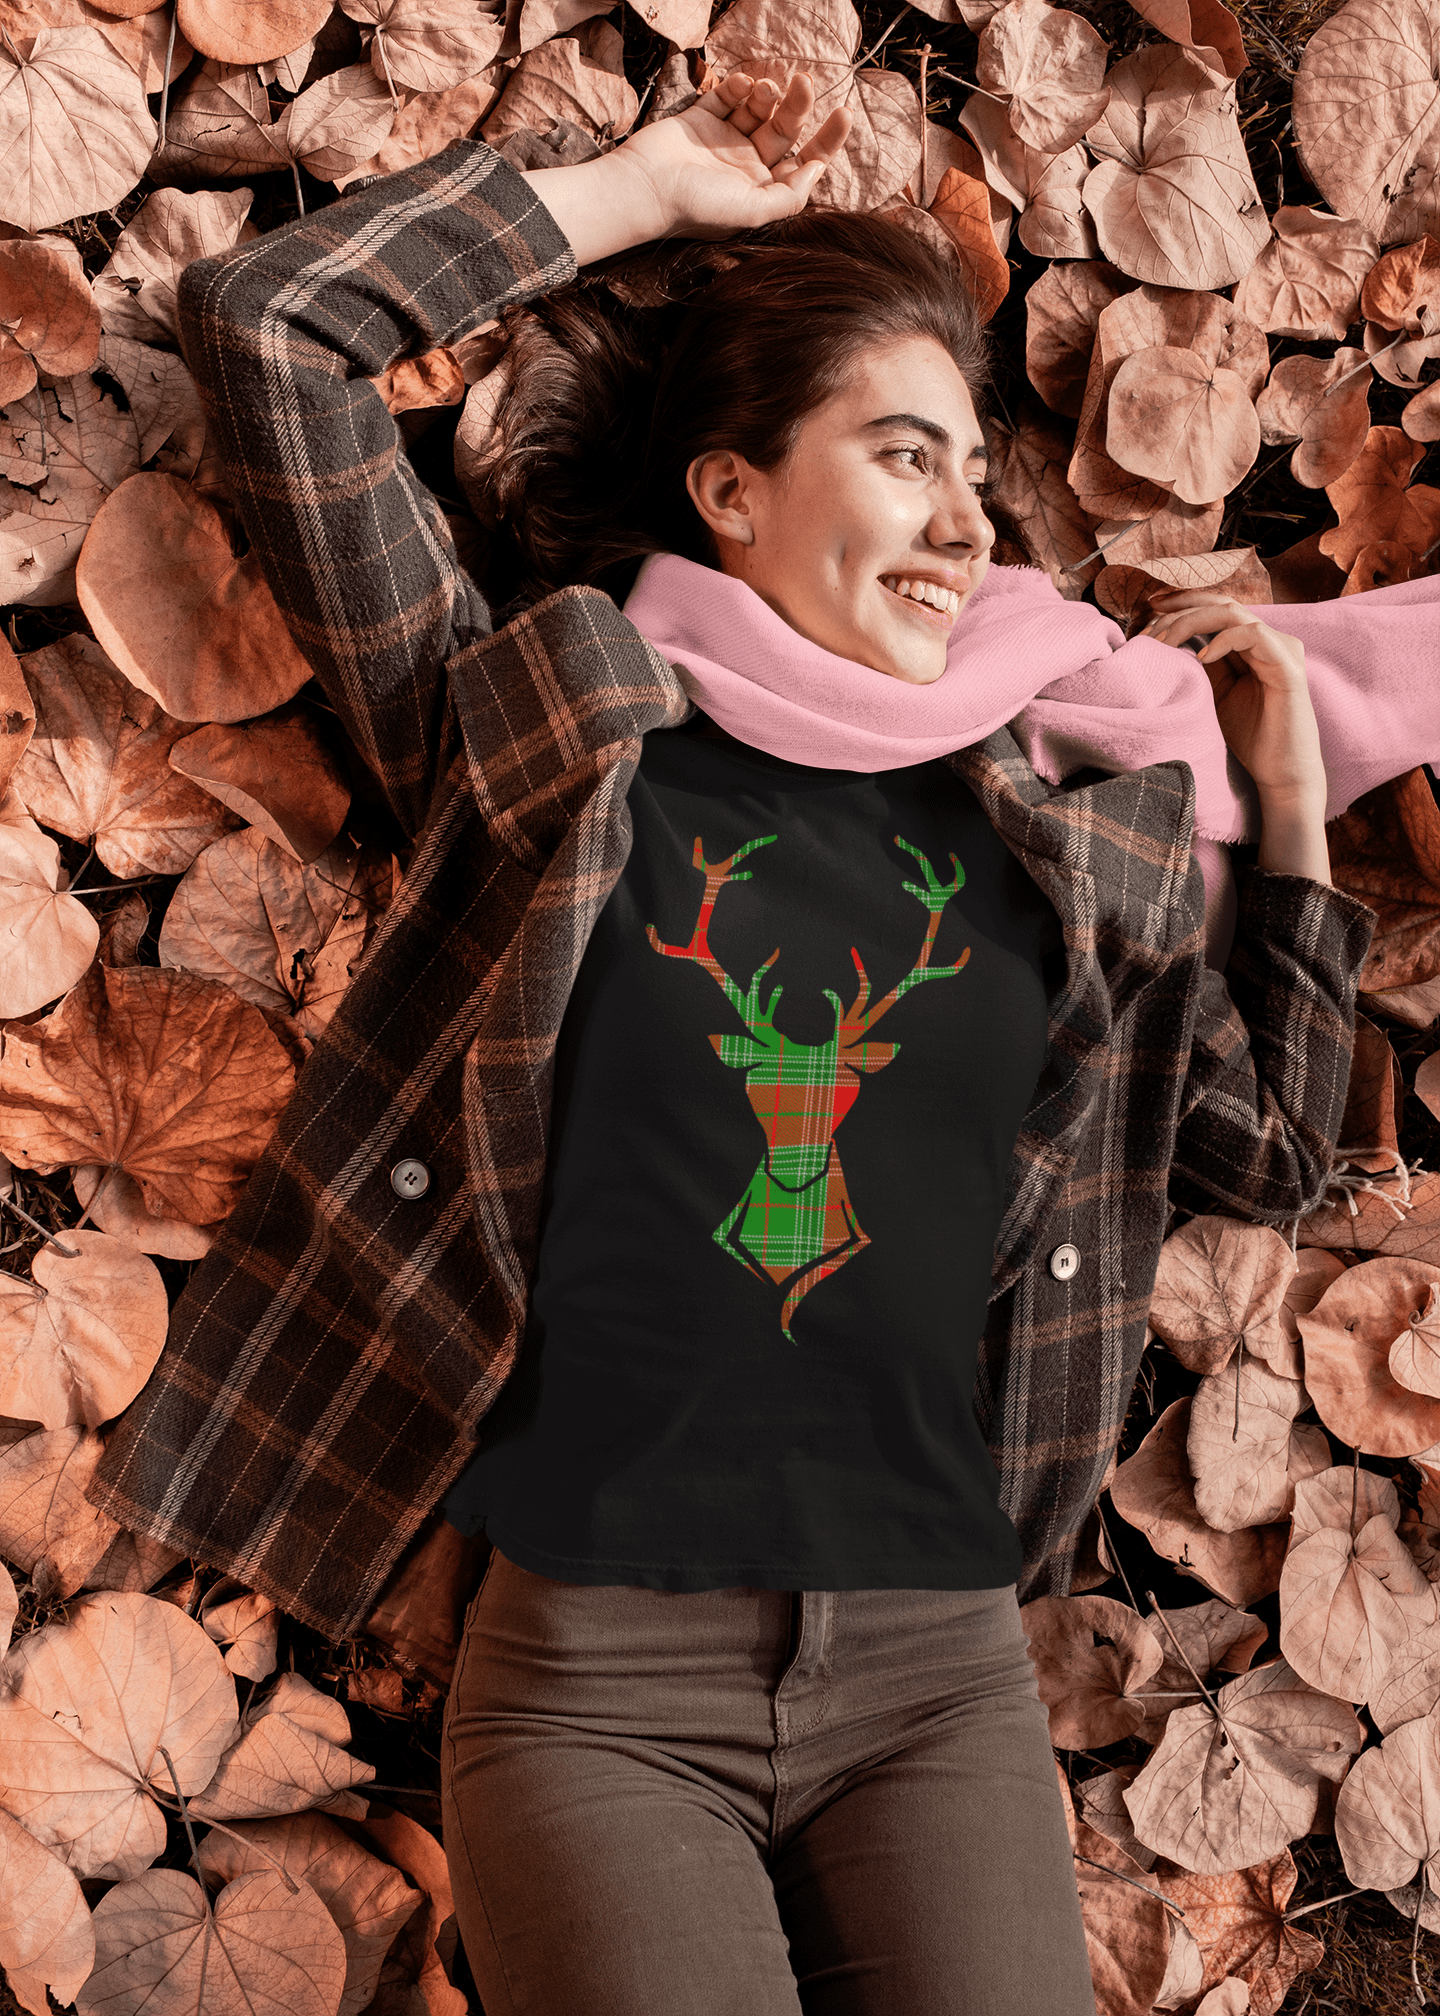 Shop Happy Christmas Plaid Buck Deer Short-Sleeve Unisex T-Shirt, Clothing T-shirts, USA Boutique